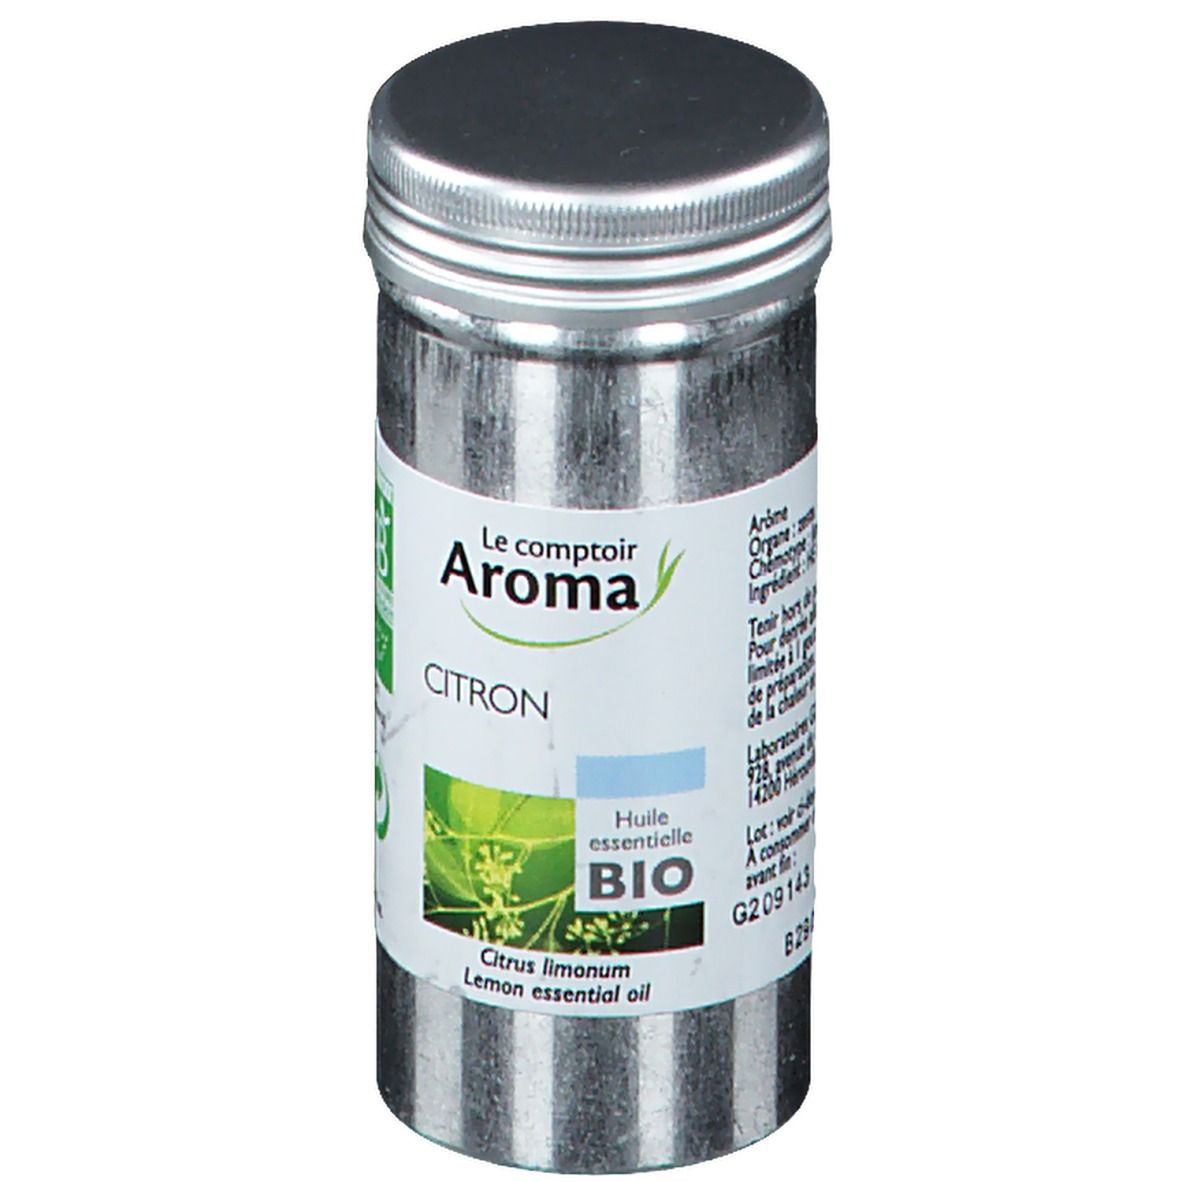 Le Comptoir Aroma huile essentielle bio citron